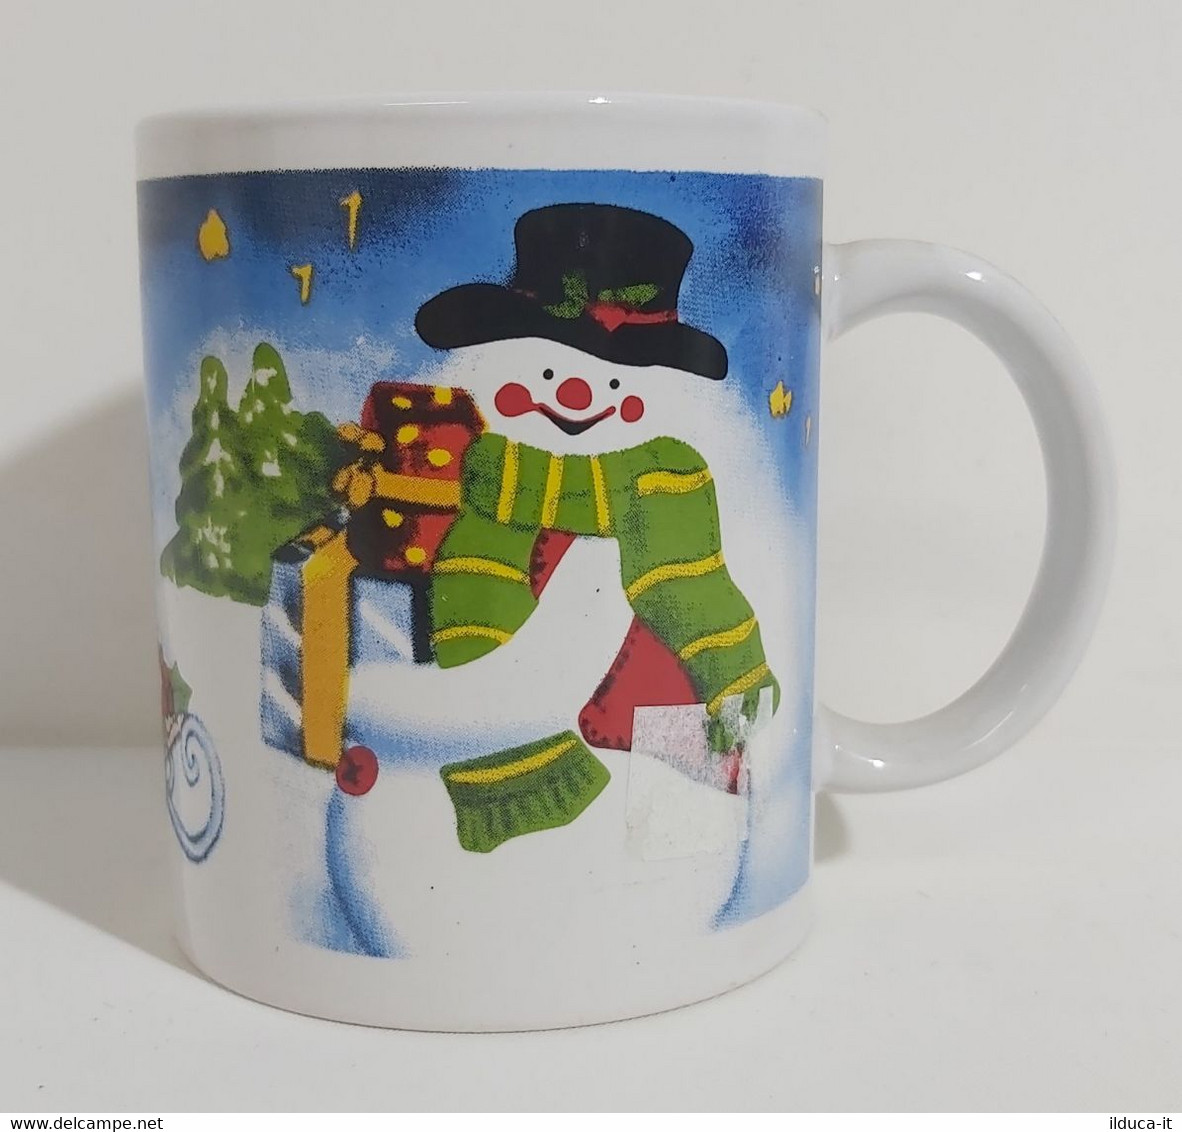 02434 Tazza (Mug) In Ceramica - Natalizia - Pupazzo Di Neve - Tassen